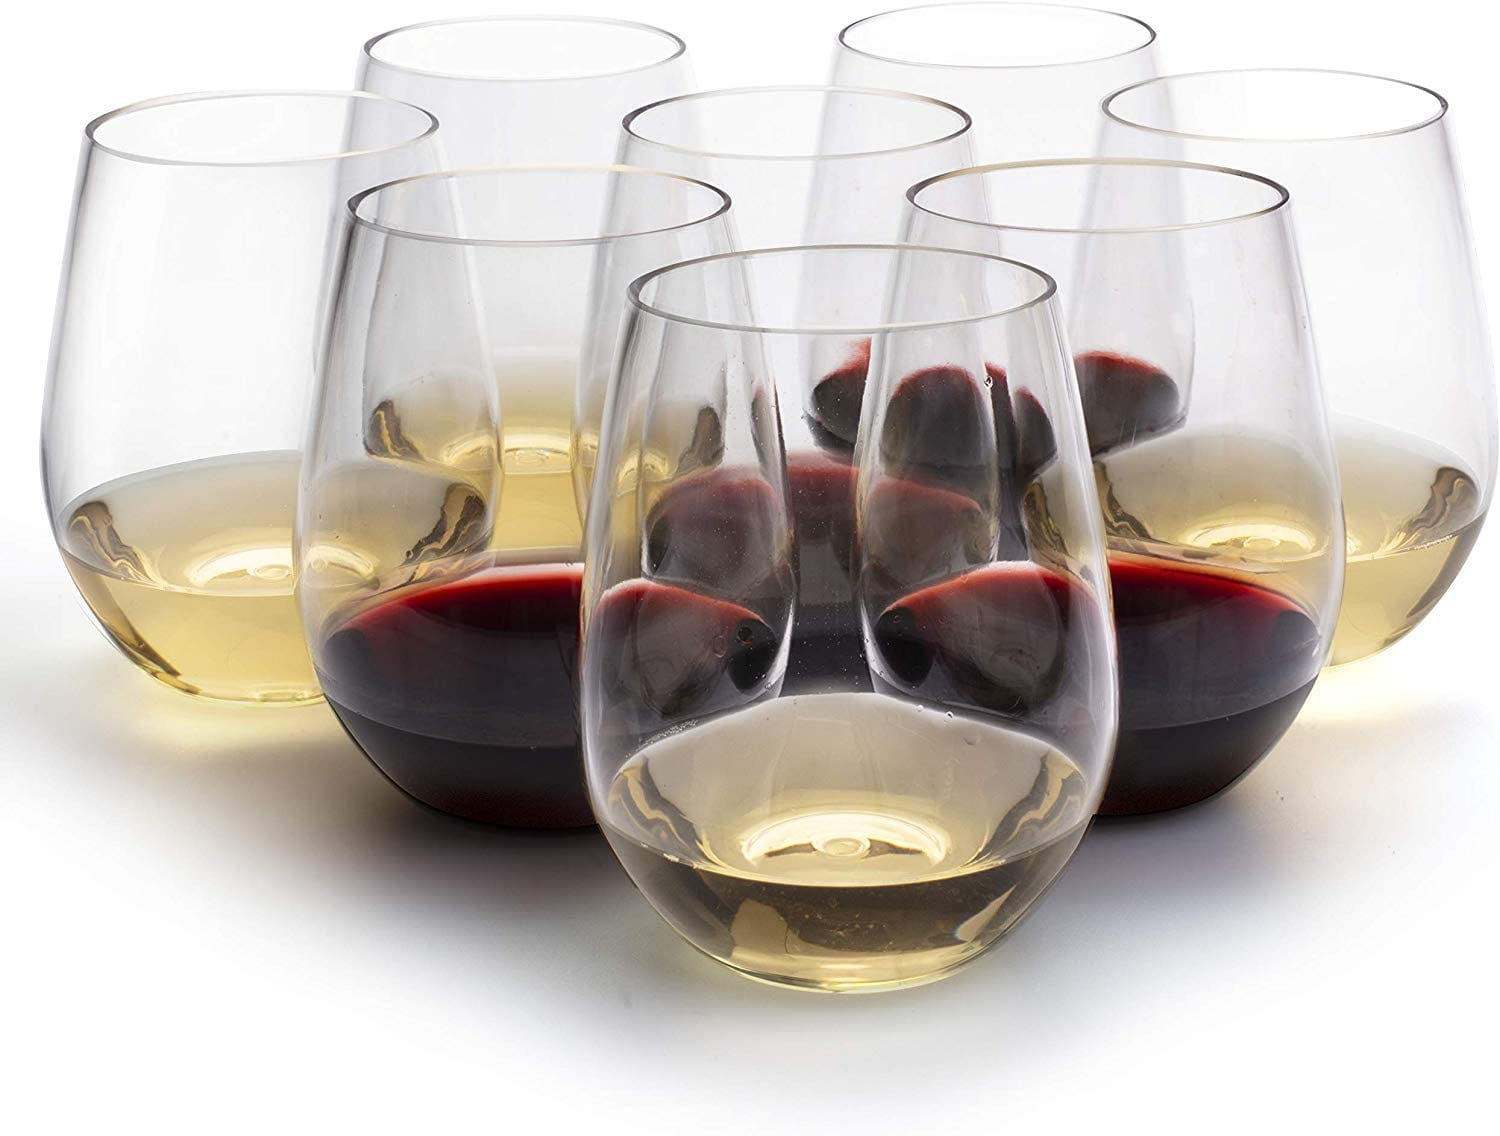 taza Outdoor Plastic Wine Glasses With Stem (20oz), Unbreakable Tritan Wine  Glasses by TaZa